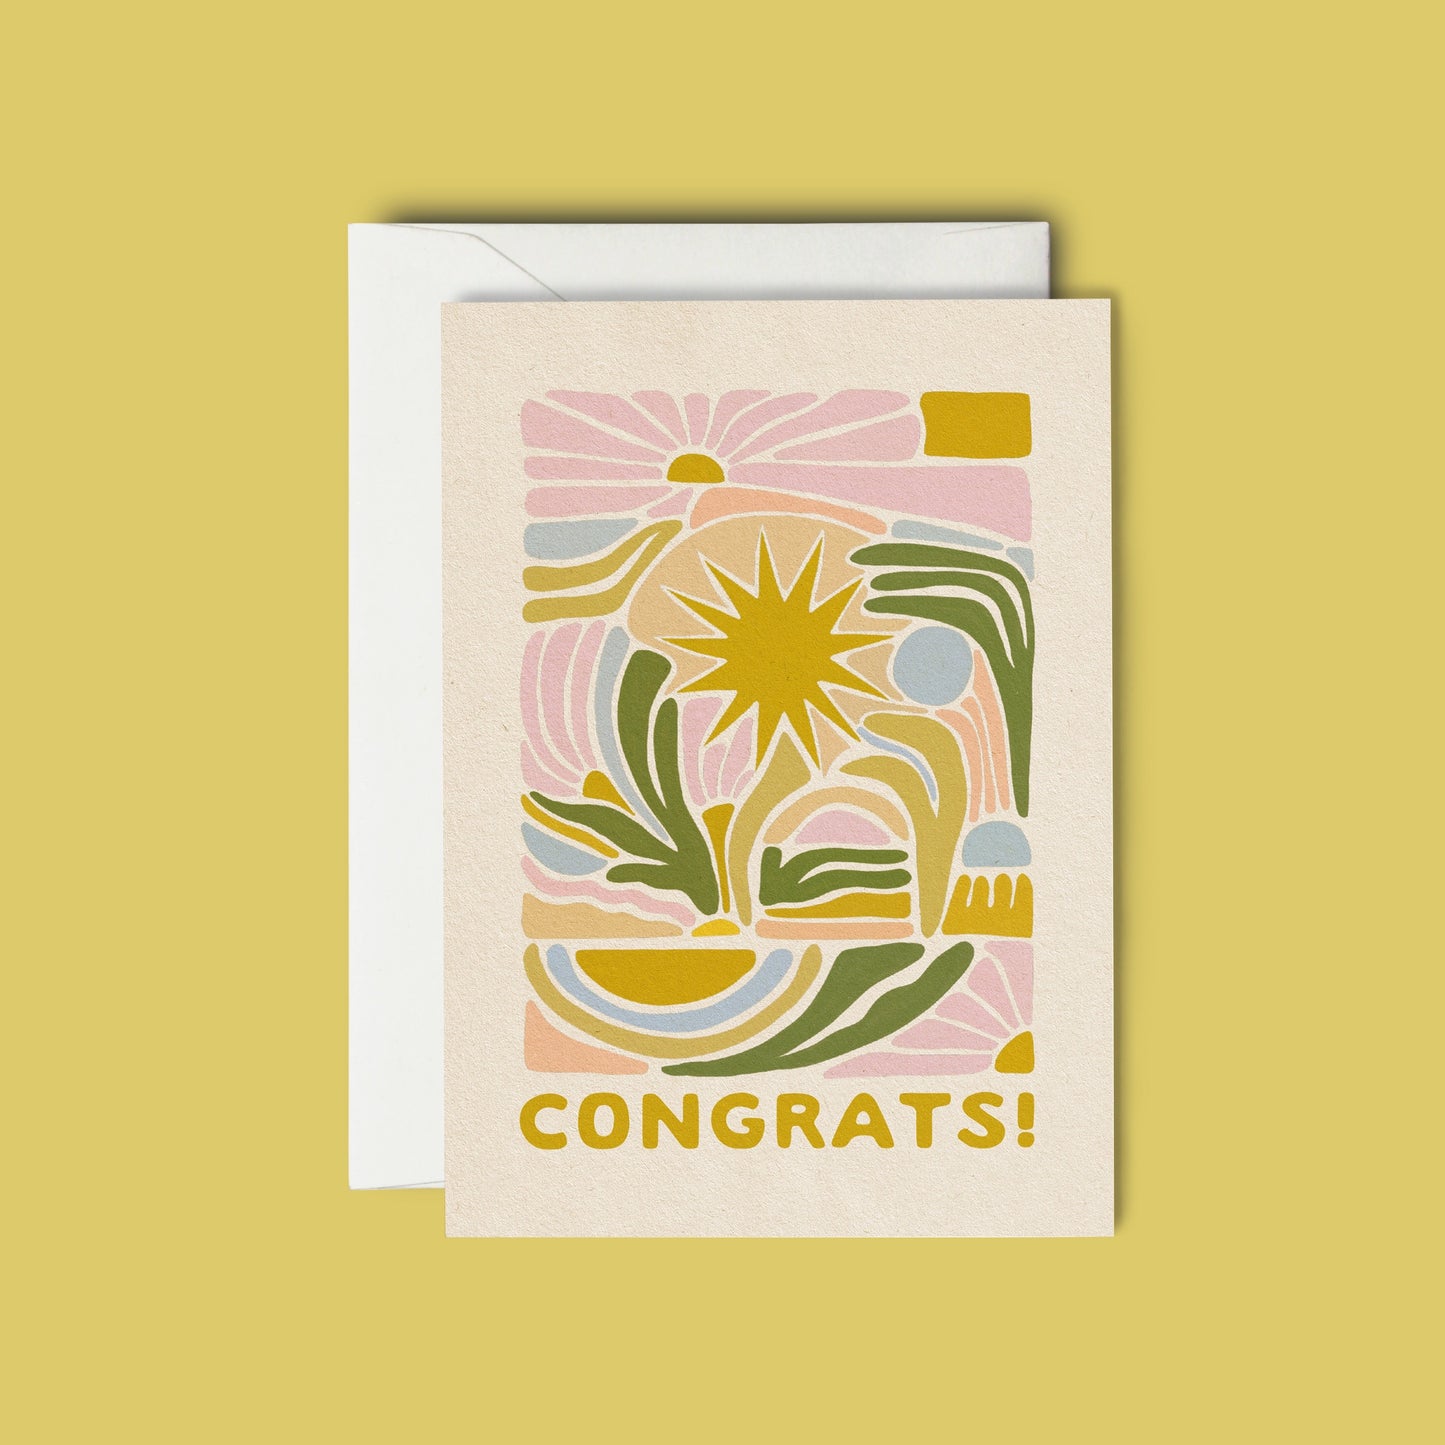 Congrats! - Greeting Card